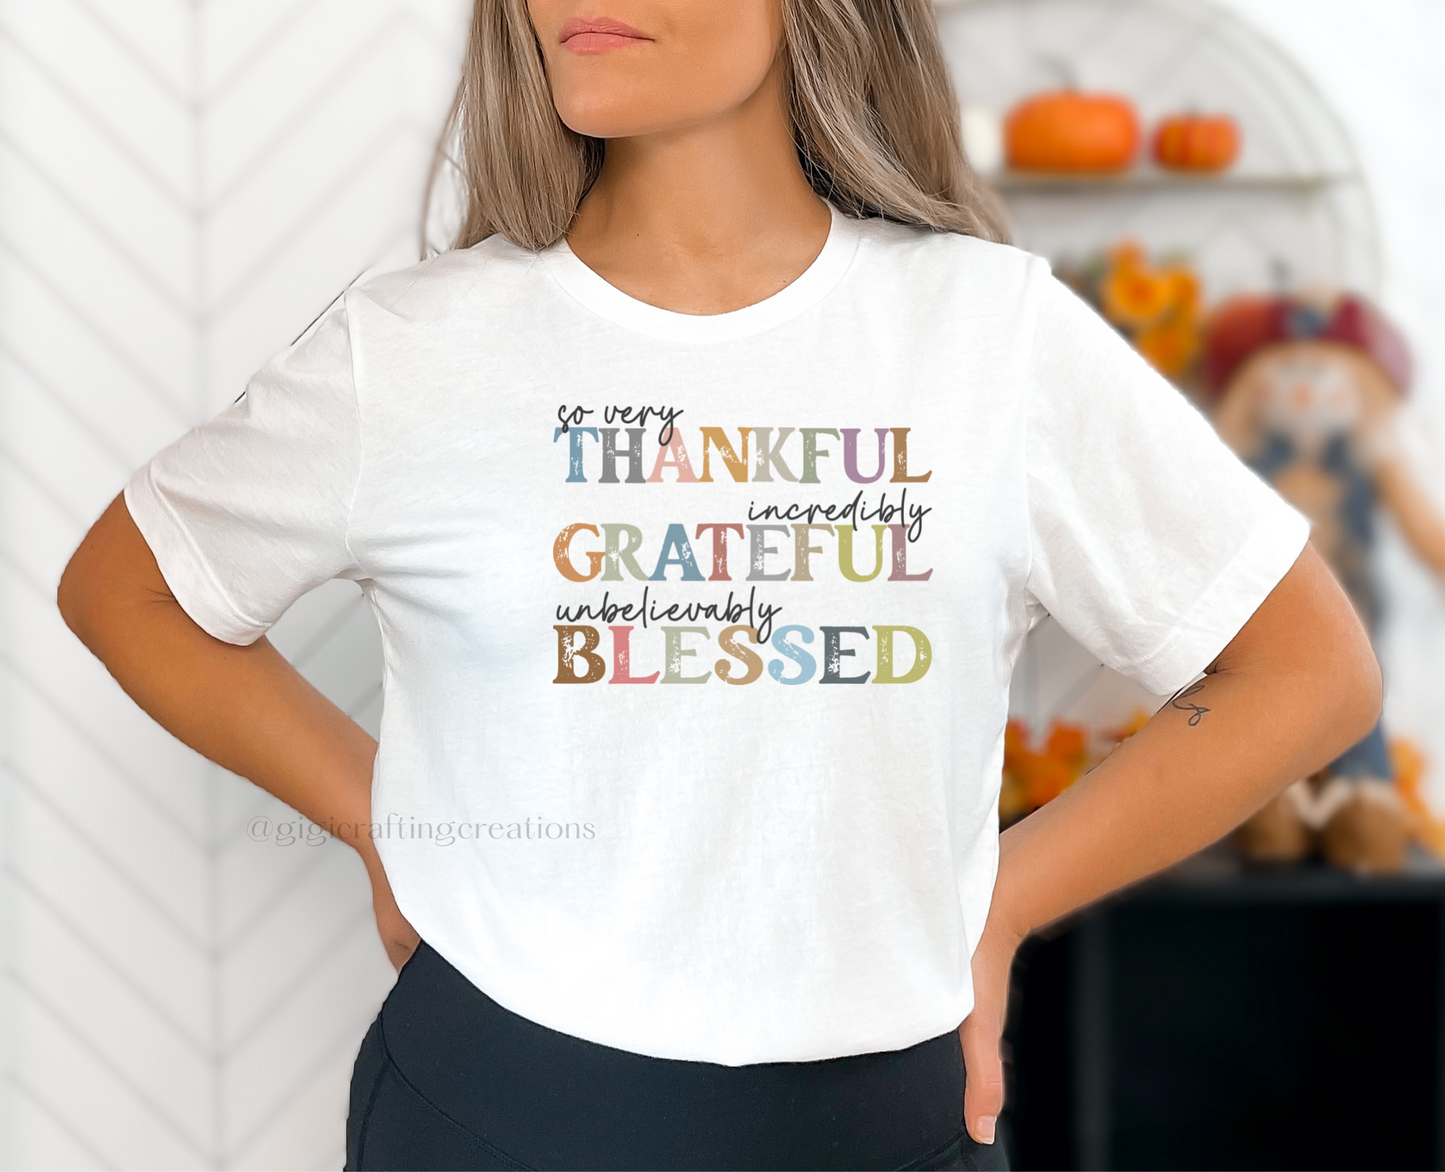 Thankful Grateful Relaxed Unisex T-shirt